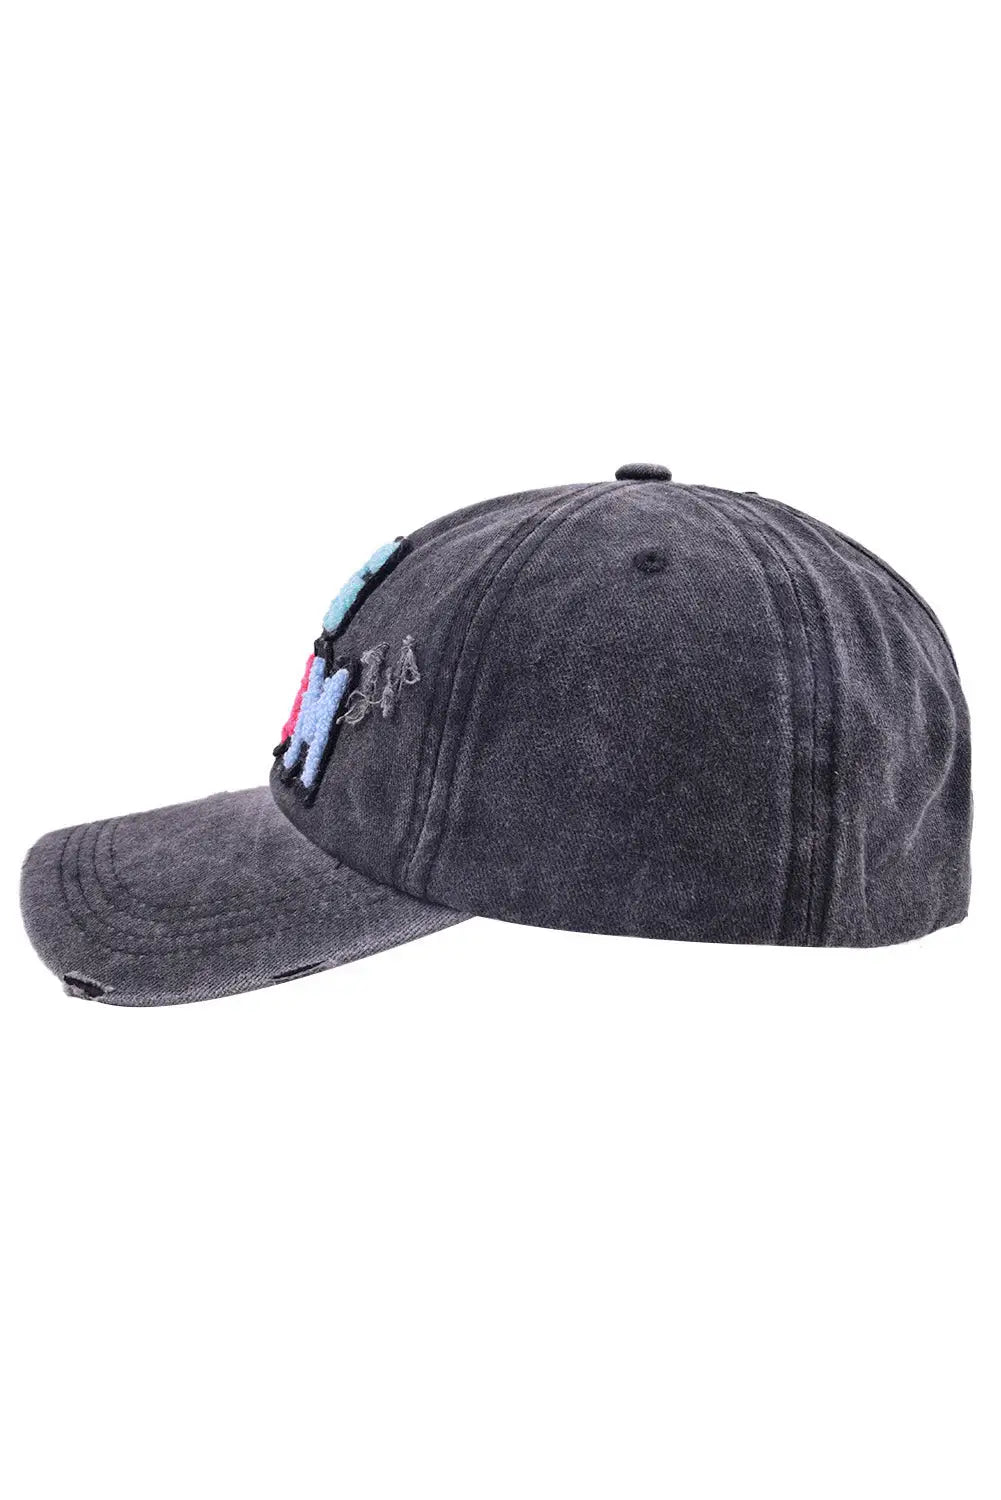 Black dog mama baseball cap - one size / cotton - caps